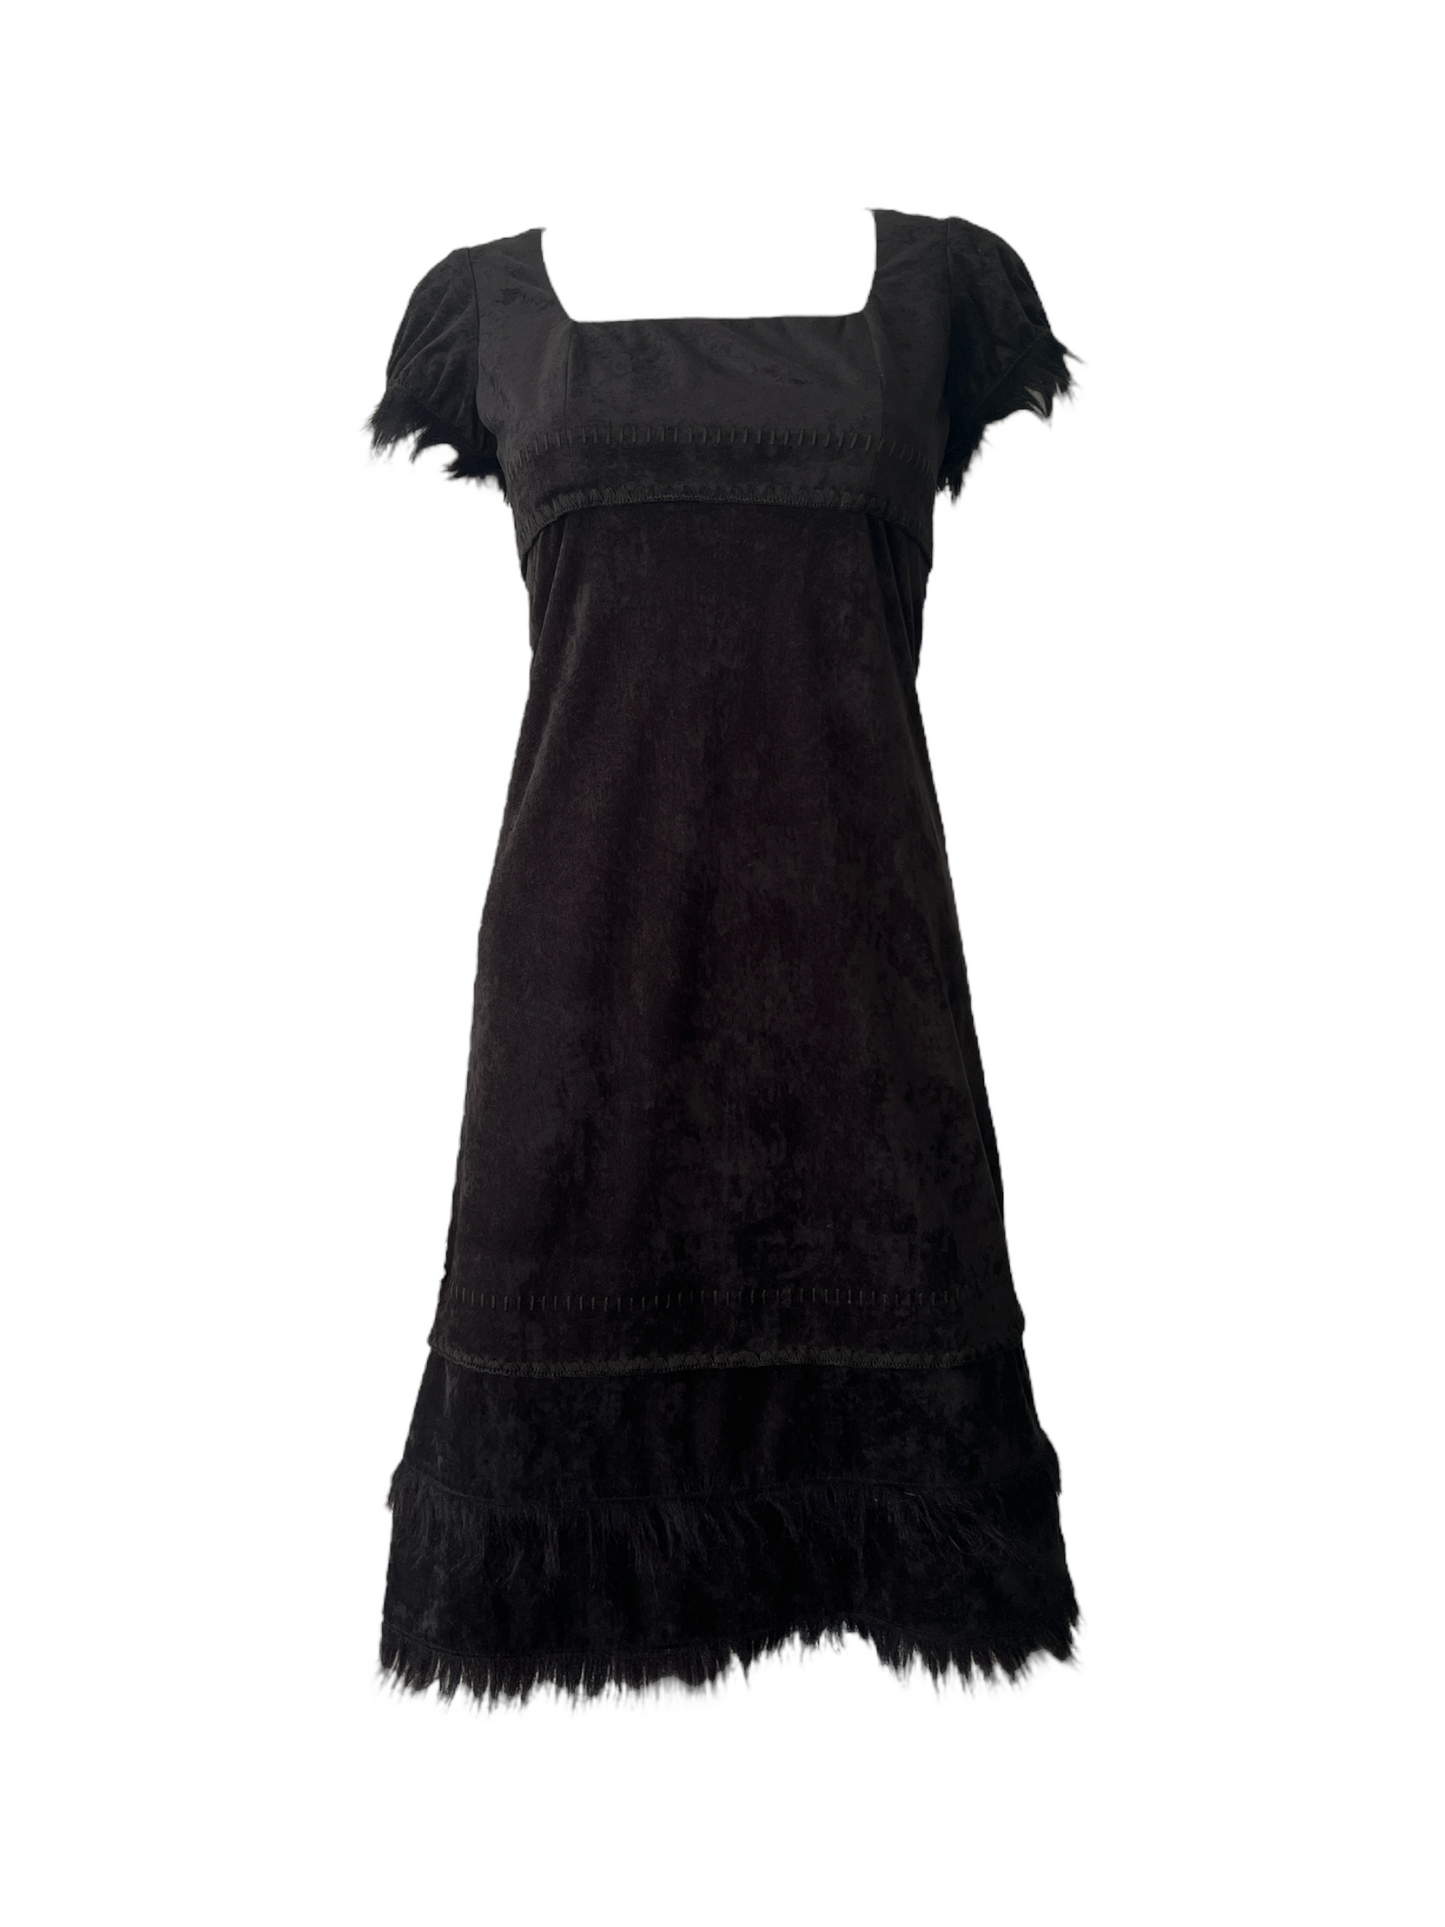 Anna Sui Fall 1998 Faux Fur Dress